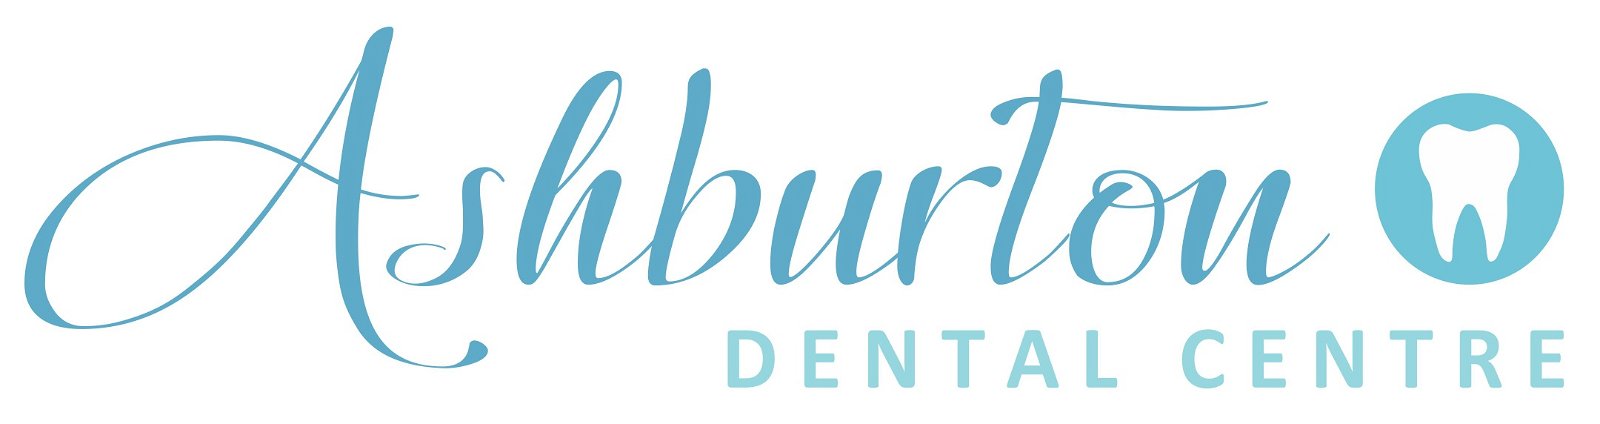 Ashburton Dental Centre - Dentists Hobart 0